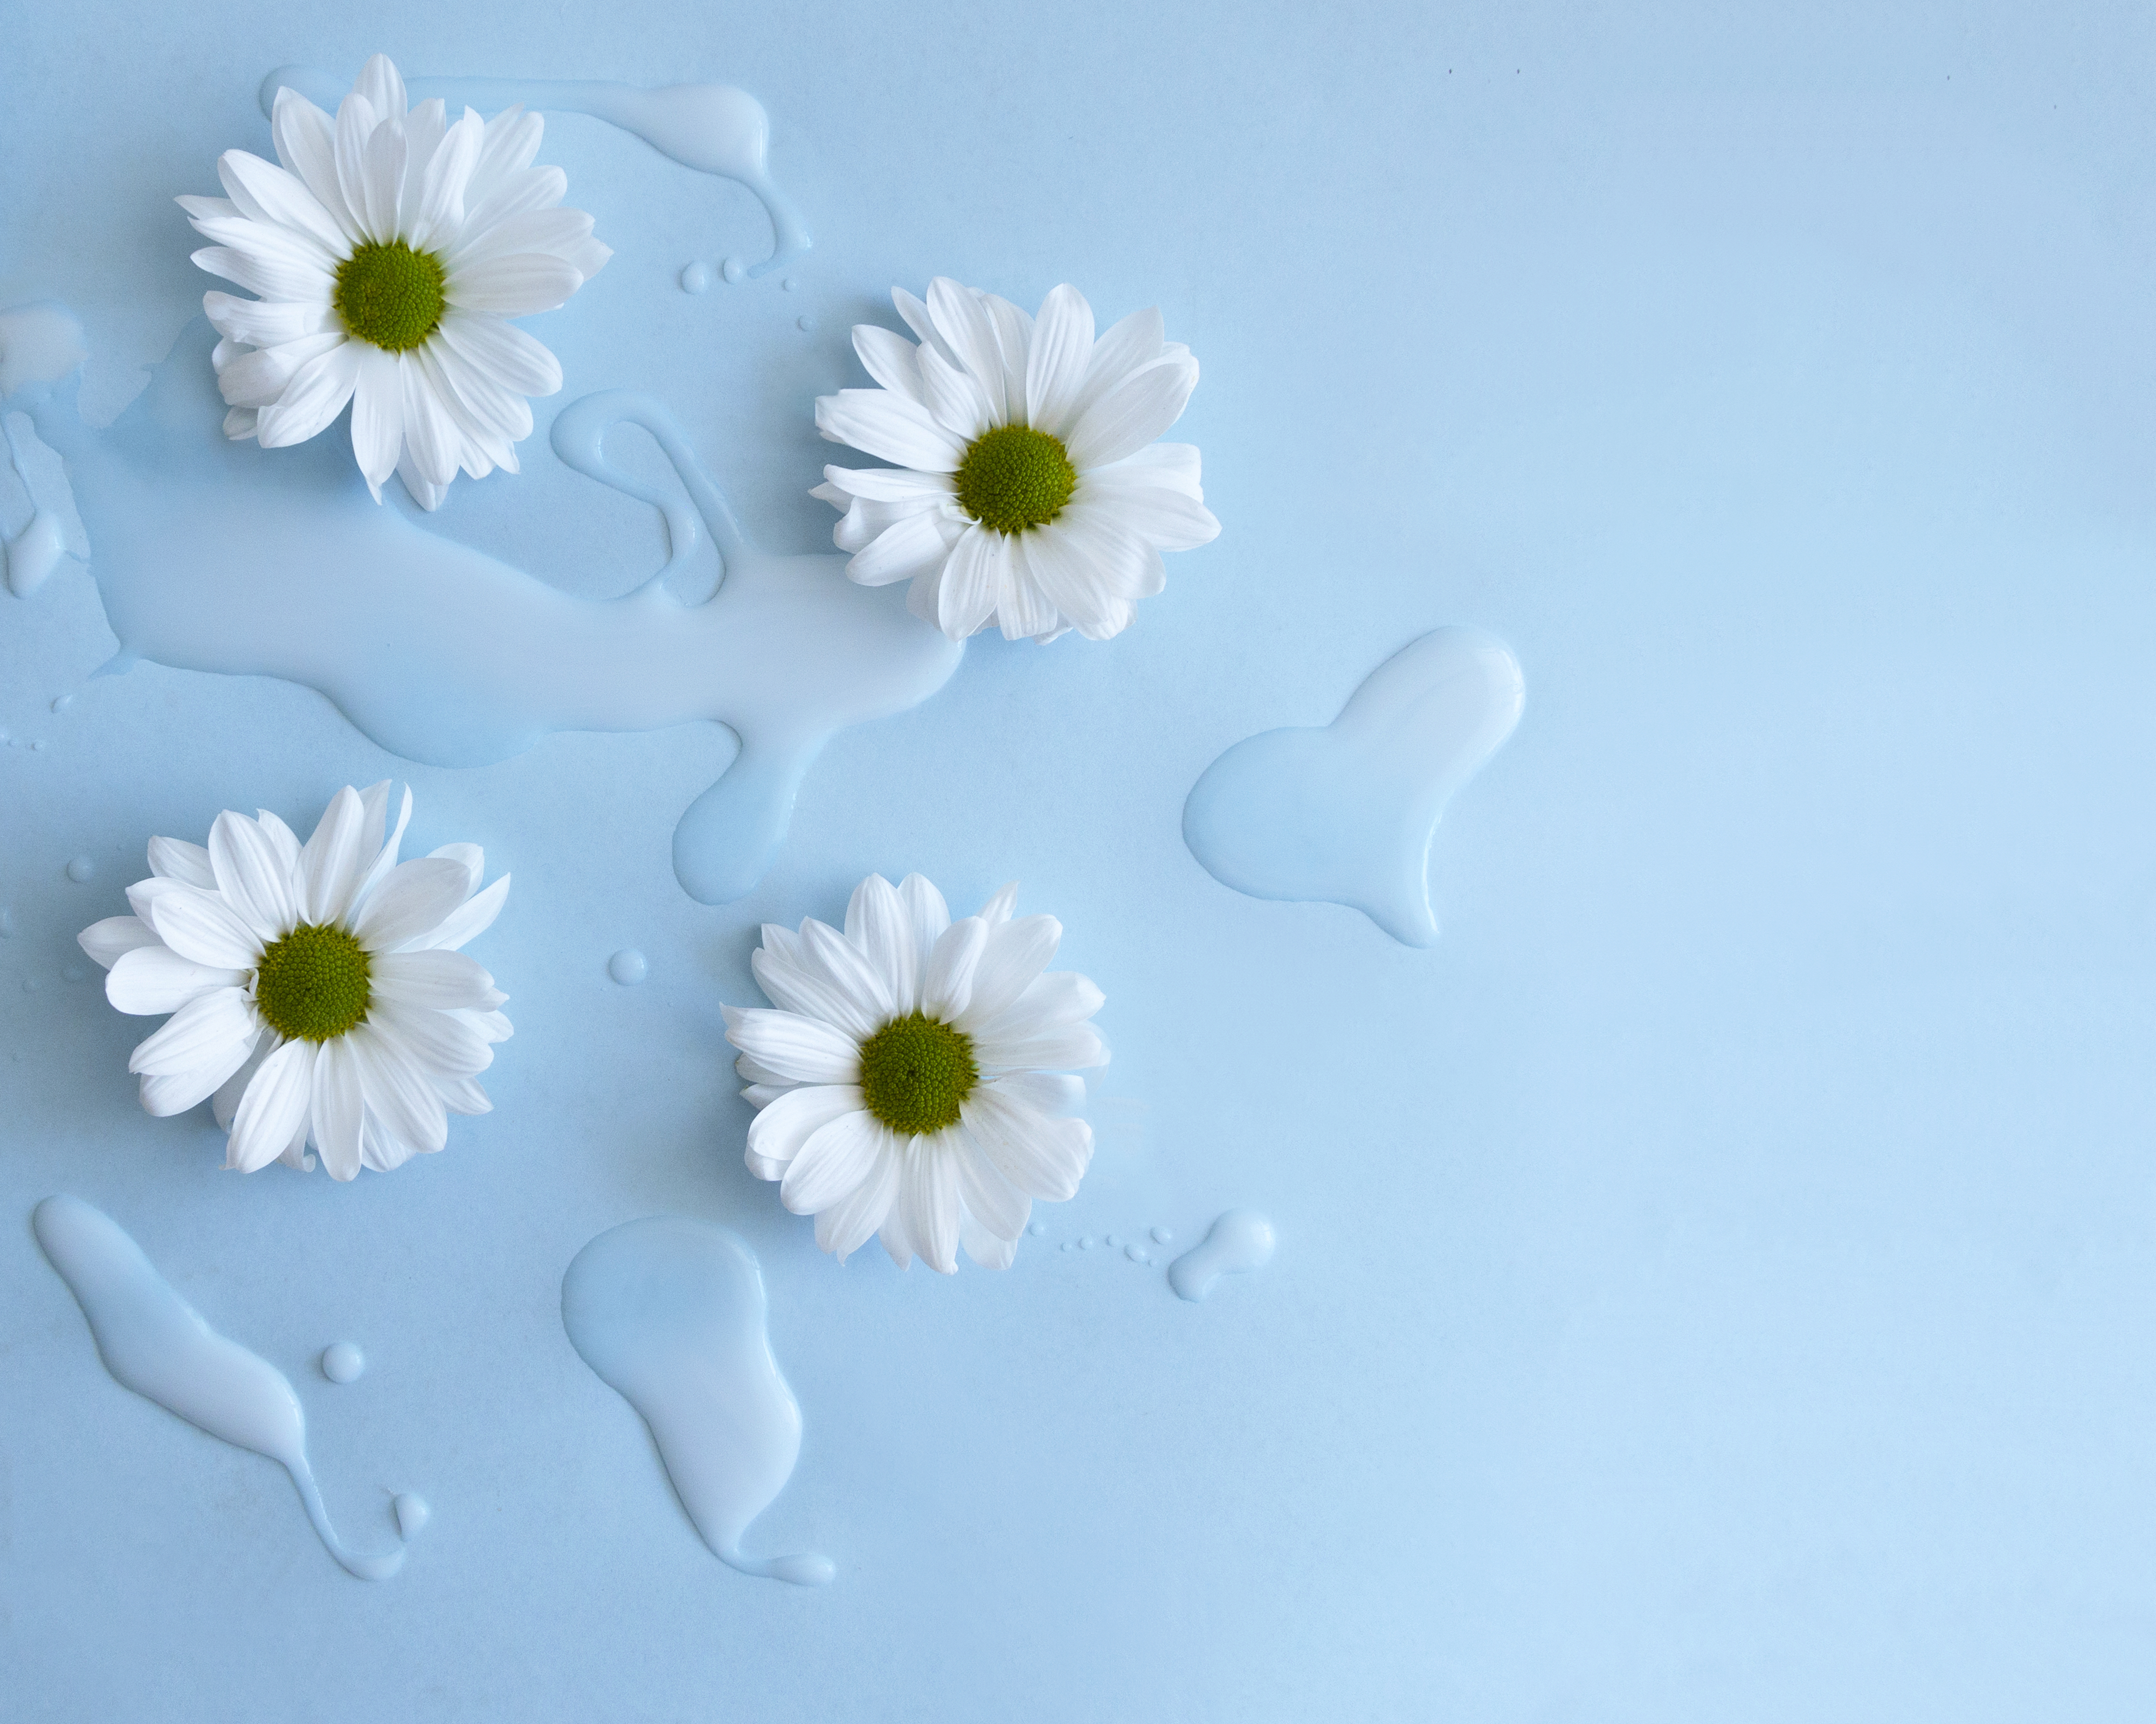 Fresh White Flowers on Blue Background Free Stock Photo | picjumbo